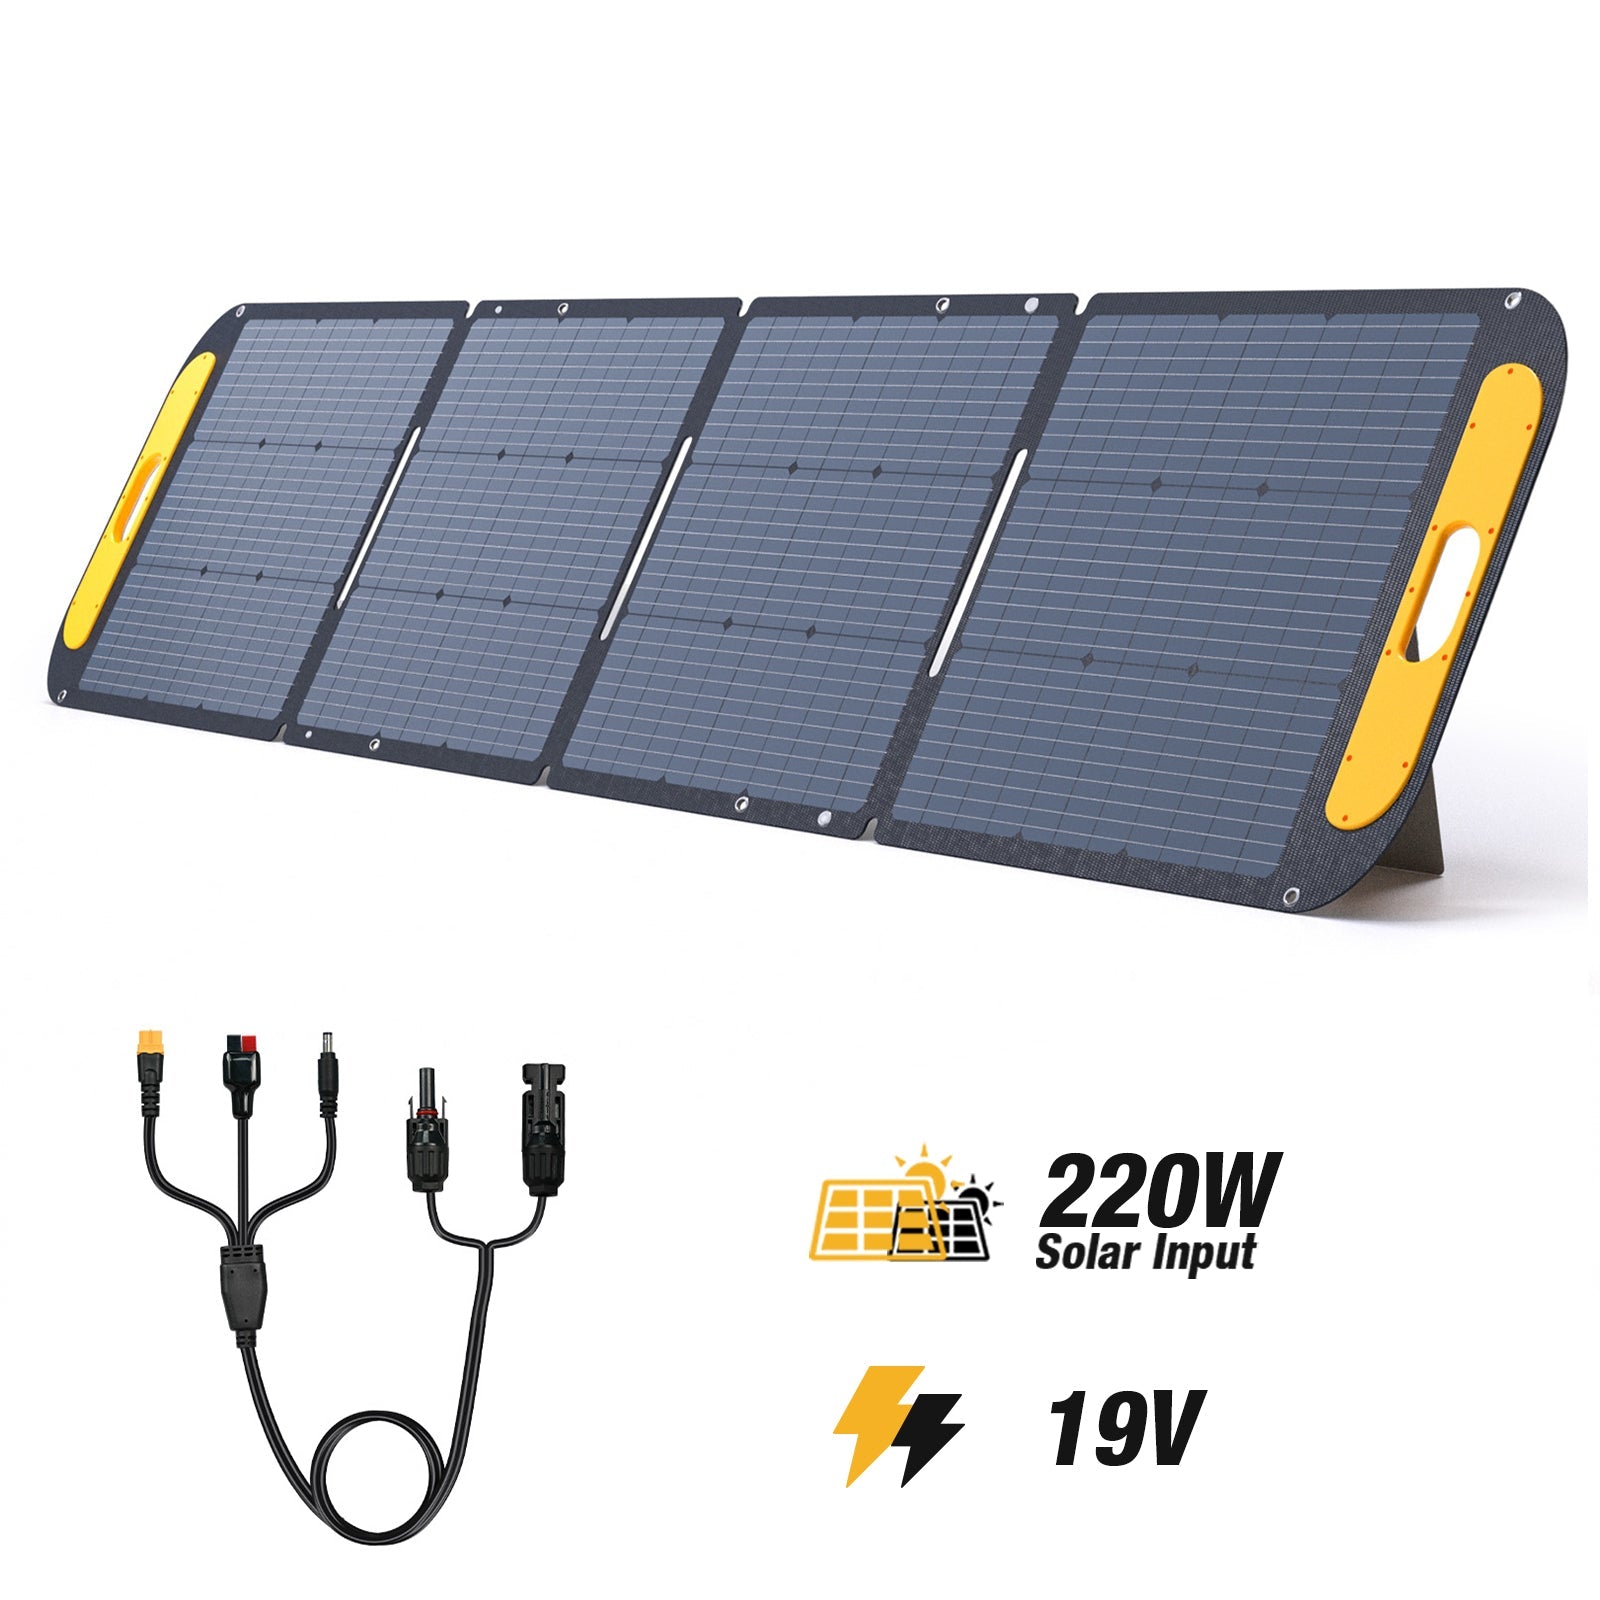 Jump 2200W/3096Wh 220W Solar Generator